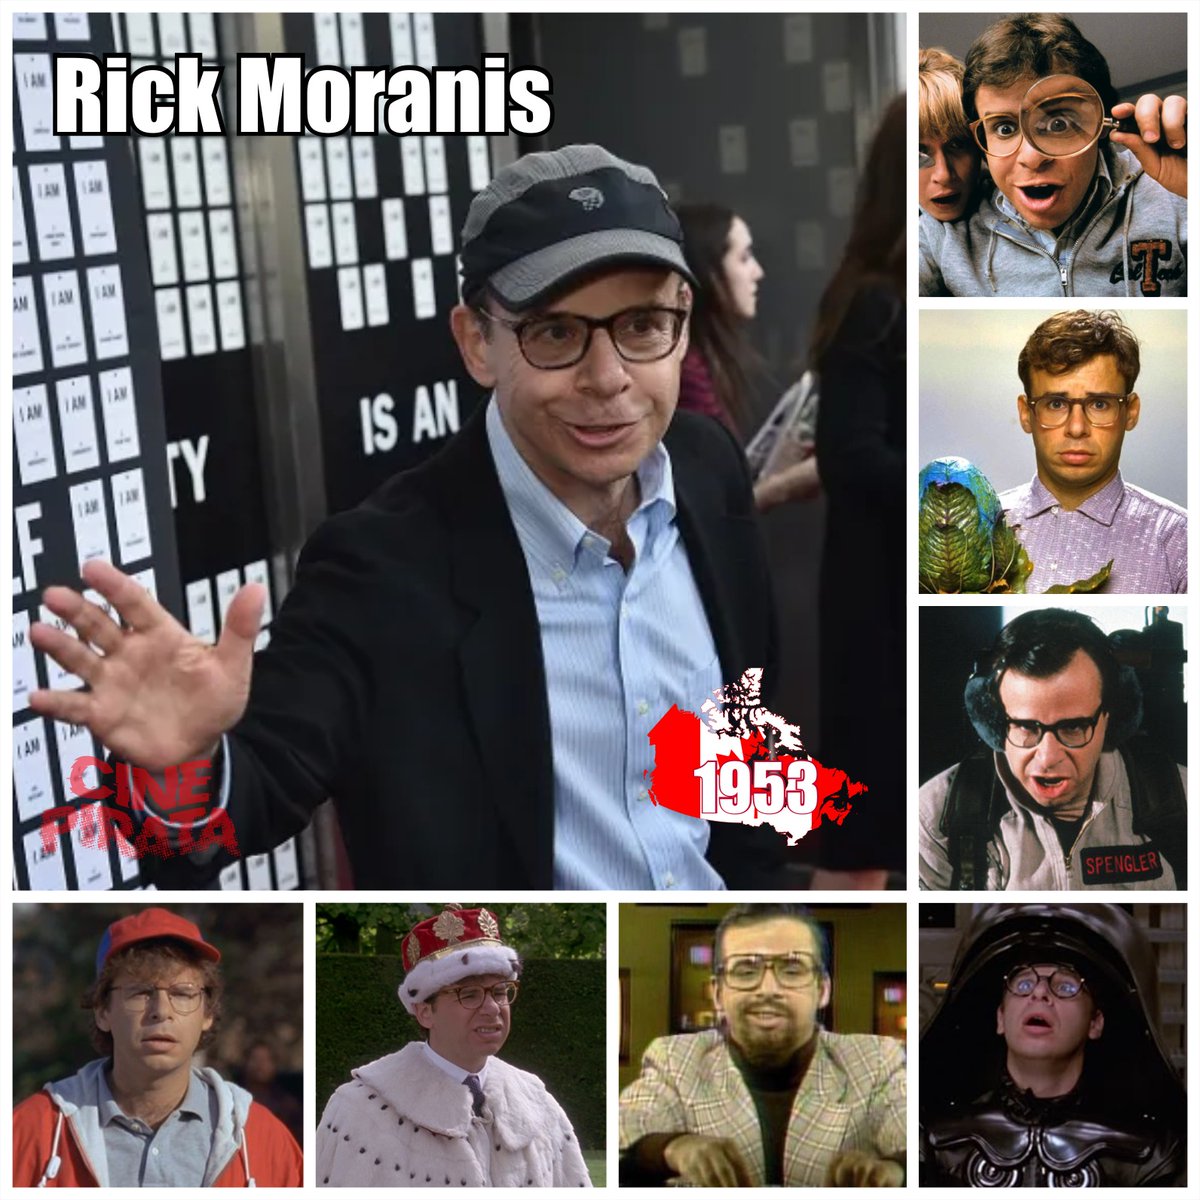 ¡ FELIZ CUMPLEAÑOS !
Rick Moranis 🥳🎂

+Cine -Pirata
#Cine #UnDiaComoHoy #CinePirata #RickMoranis #Cine2024